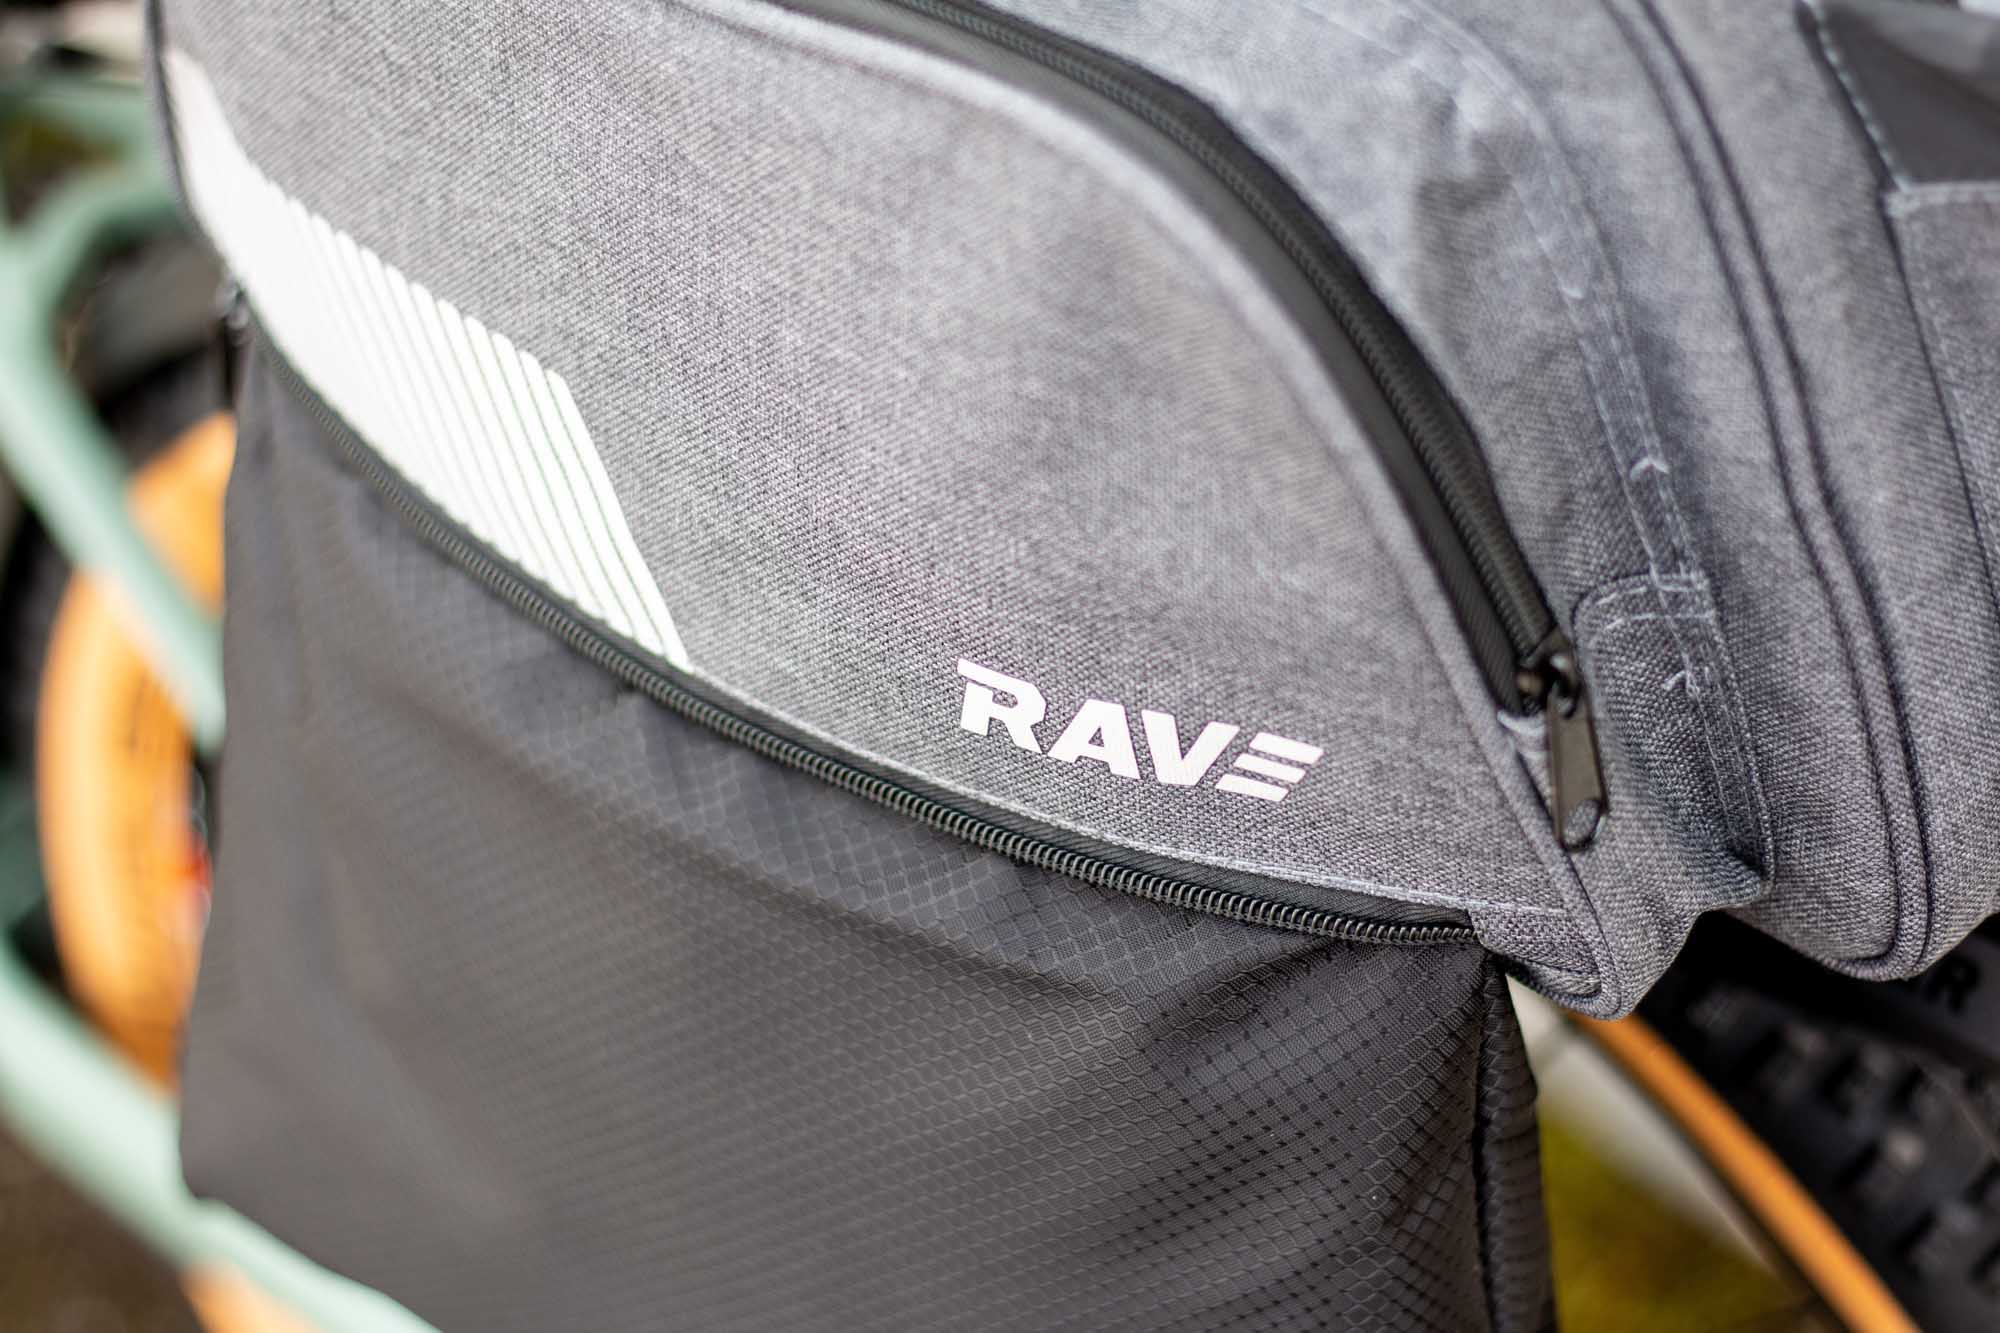 Rave luggage carrier bag - cooler bag approx. 5 liters